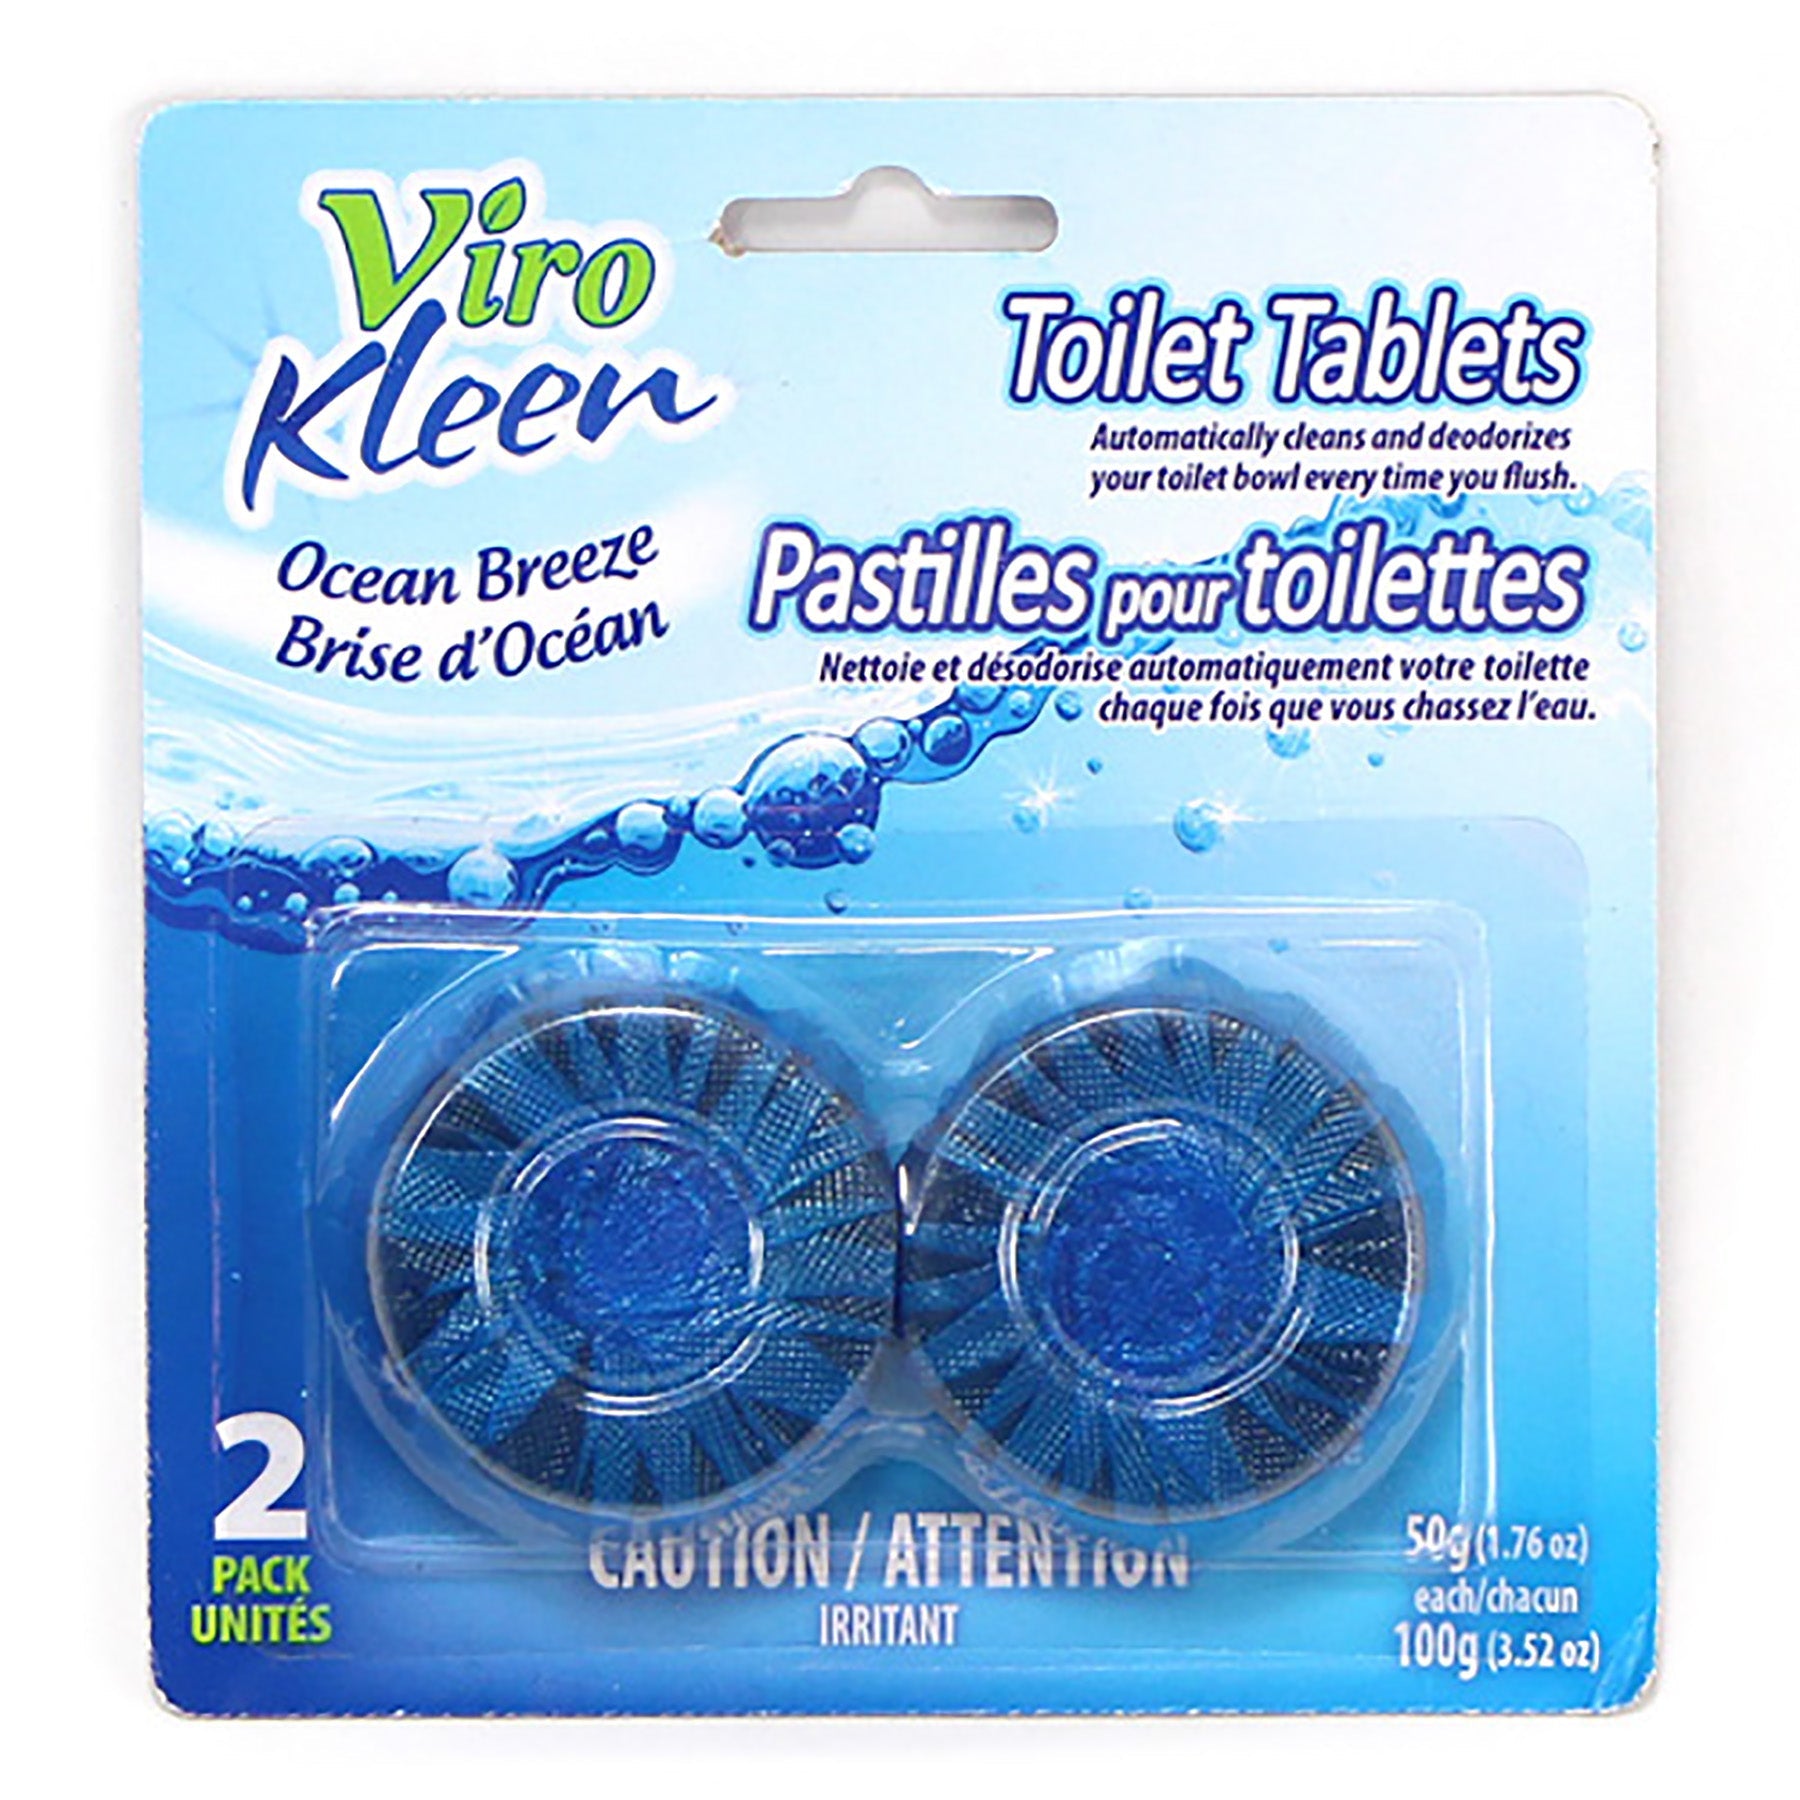 Viro Kleen 2 Toilet Tablets Ocean Breeze 1.76oz each